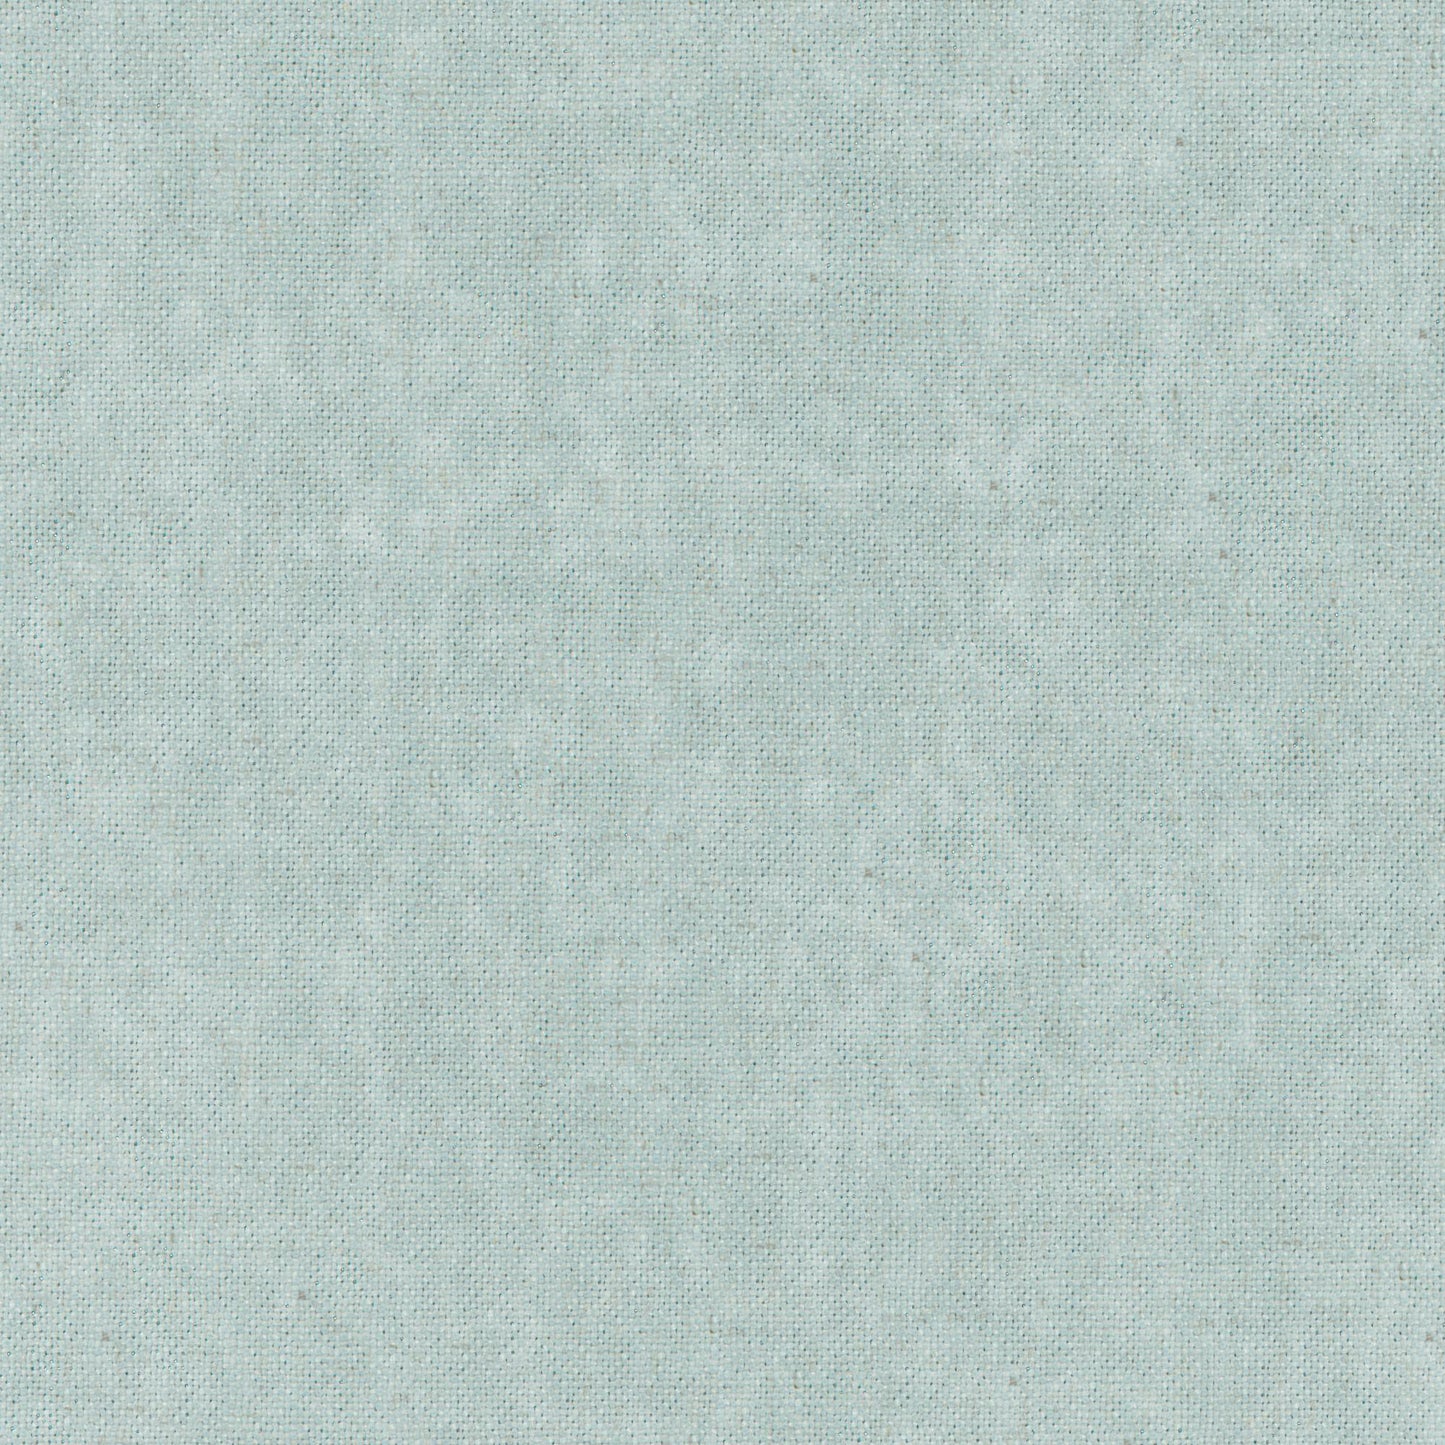 Home Fabrics - FibreGuard - Monterey - 08-Cloud - Fabric per Meter